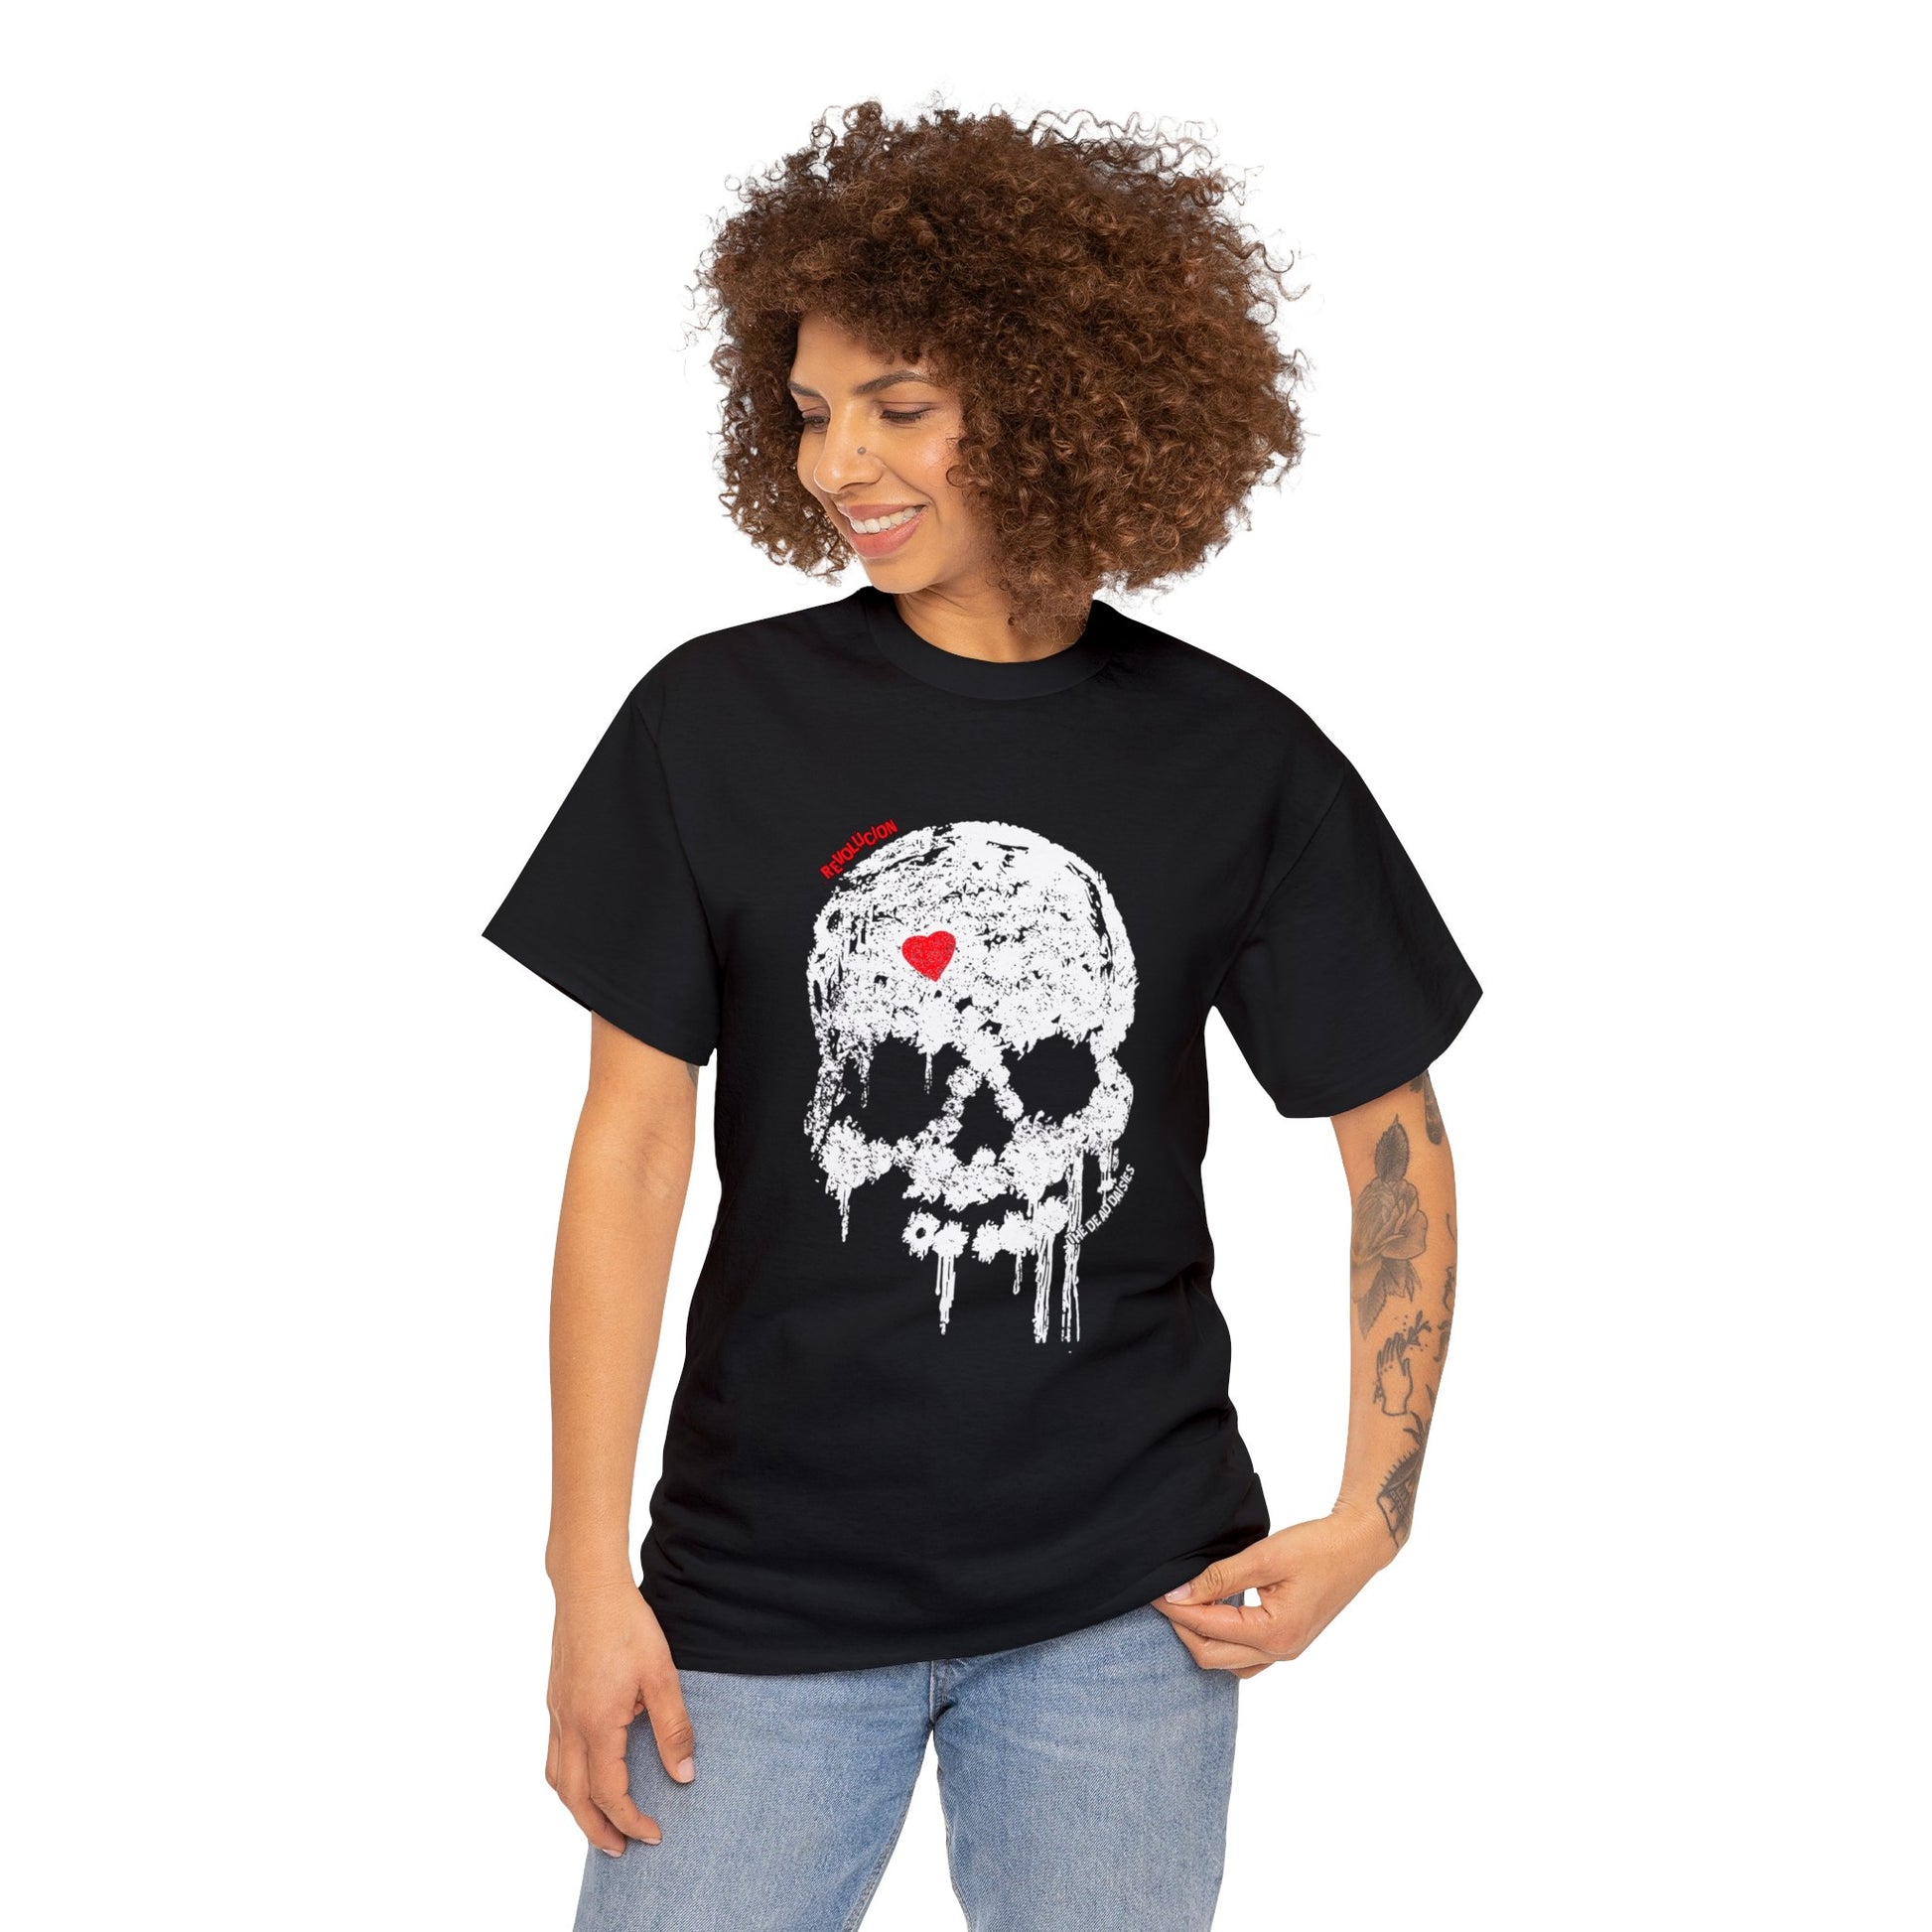 THE DEAD DAISIES Revolucion Skull T-shirt for Sale